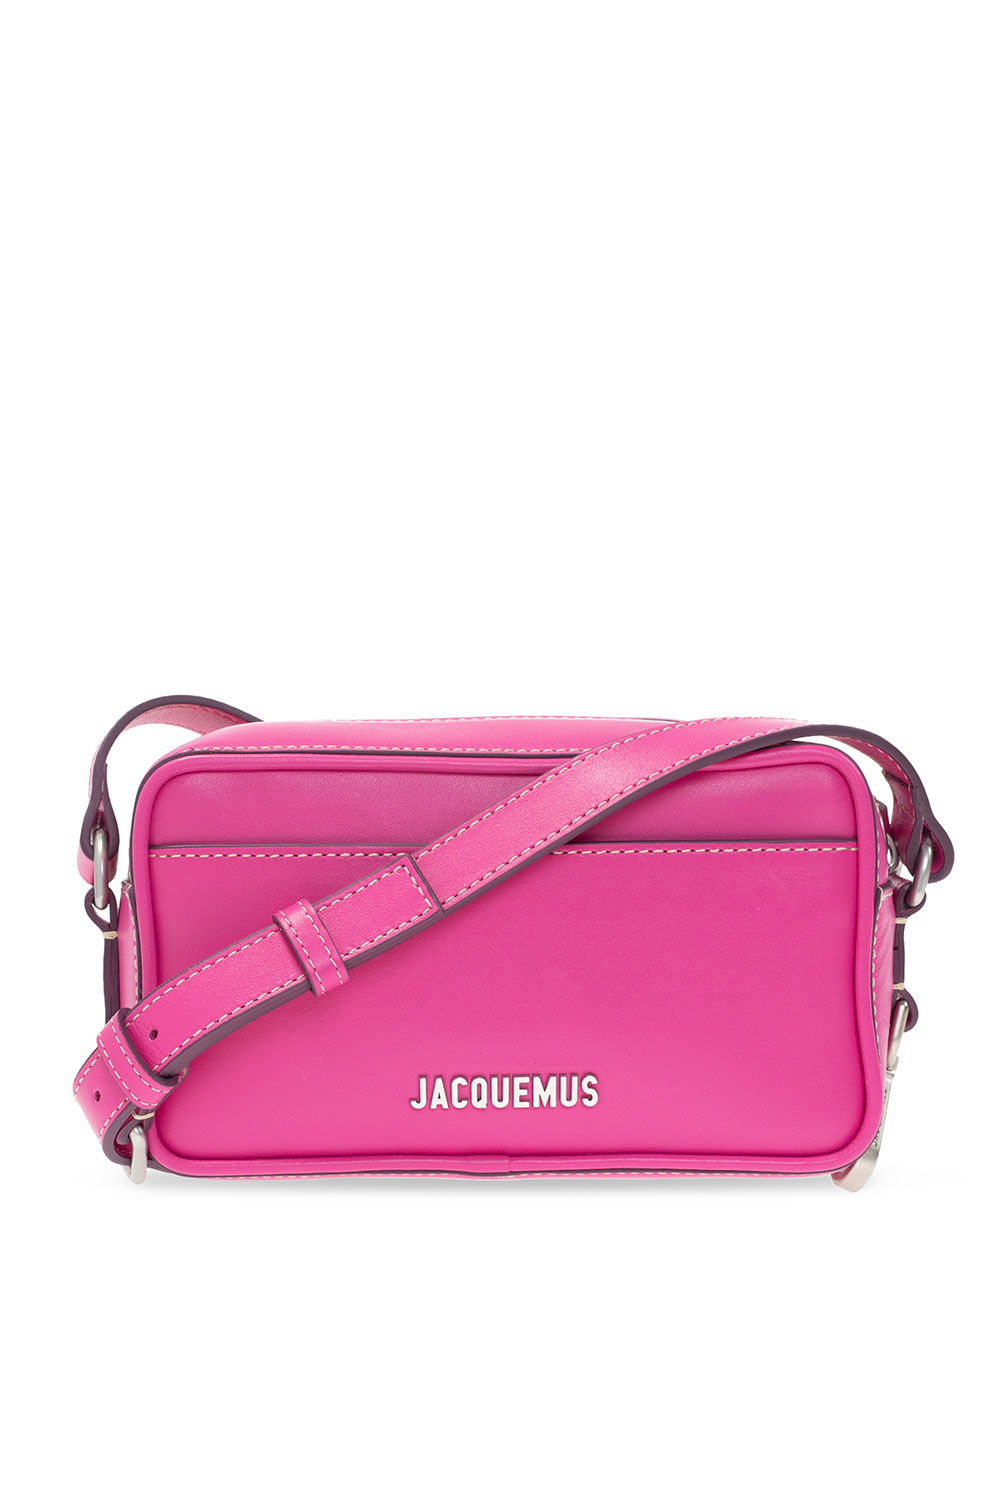 Pre-owned Pink Leather Floral Applique Pochette Bag